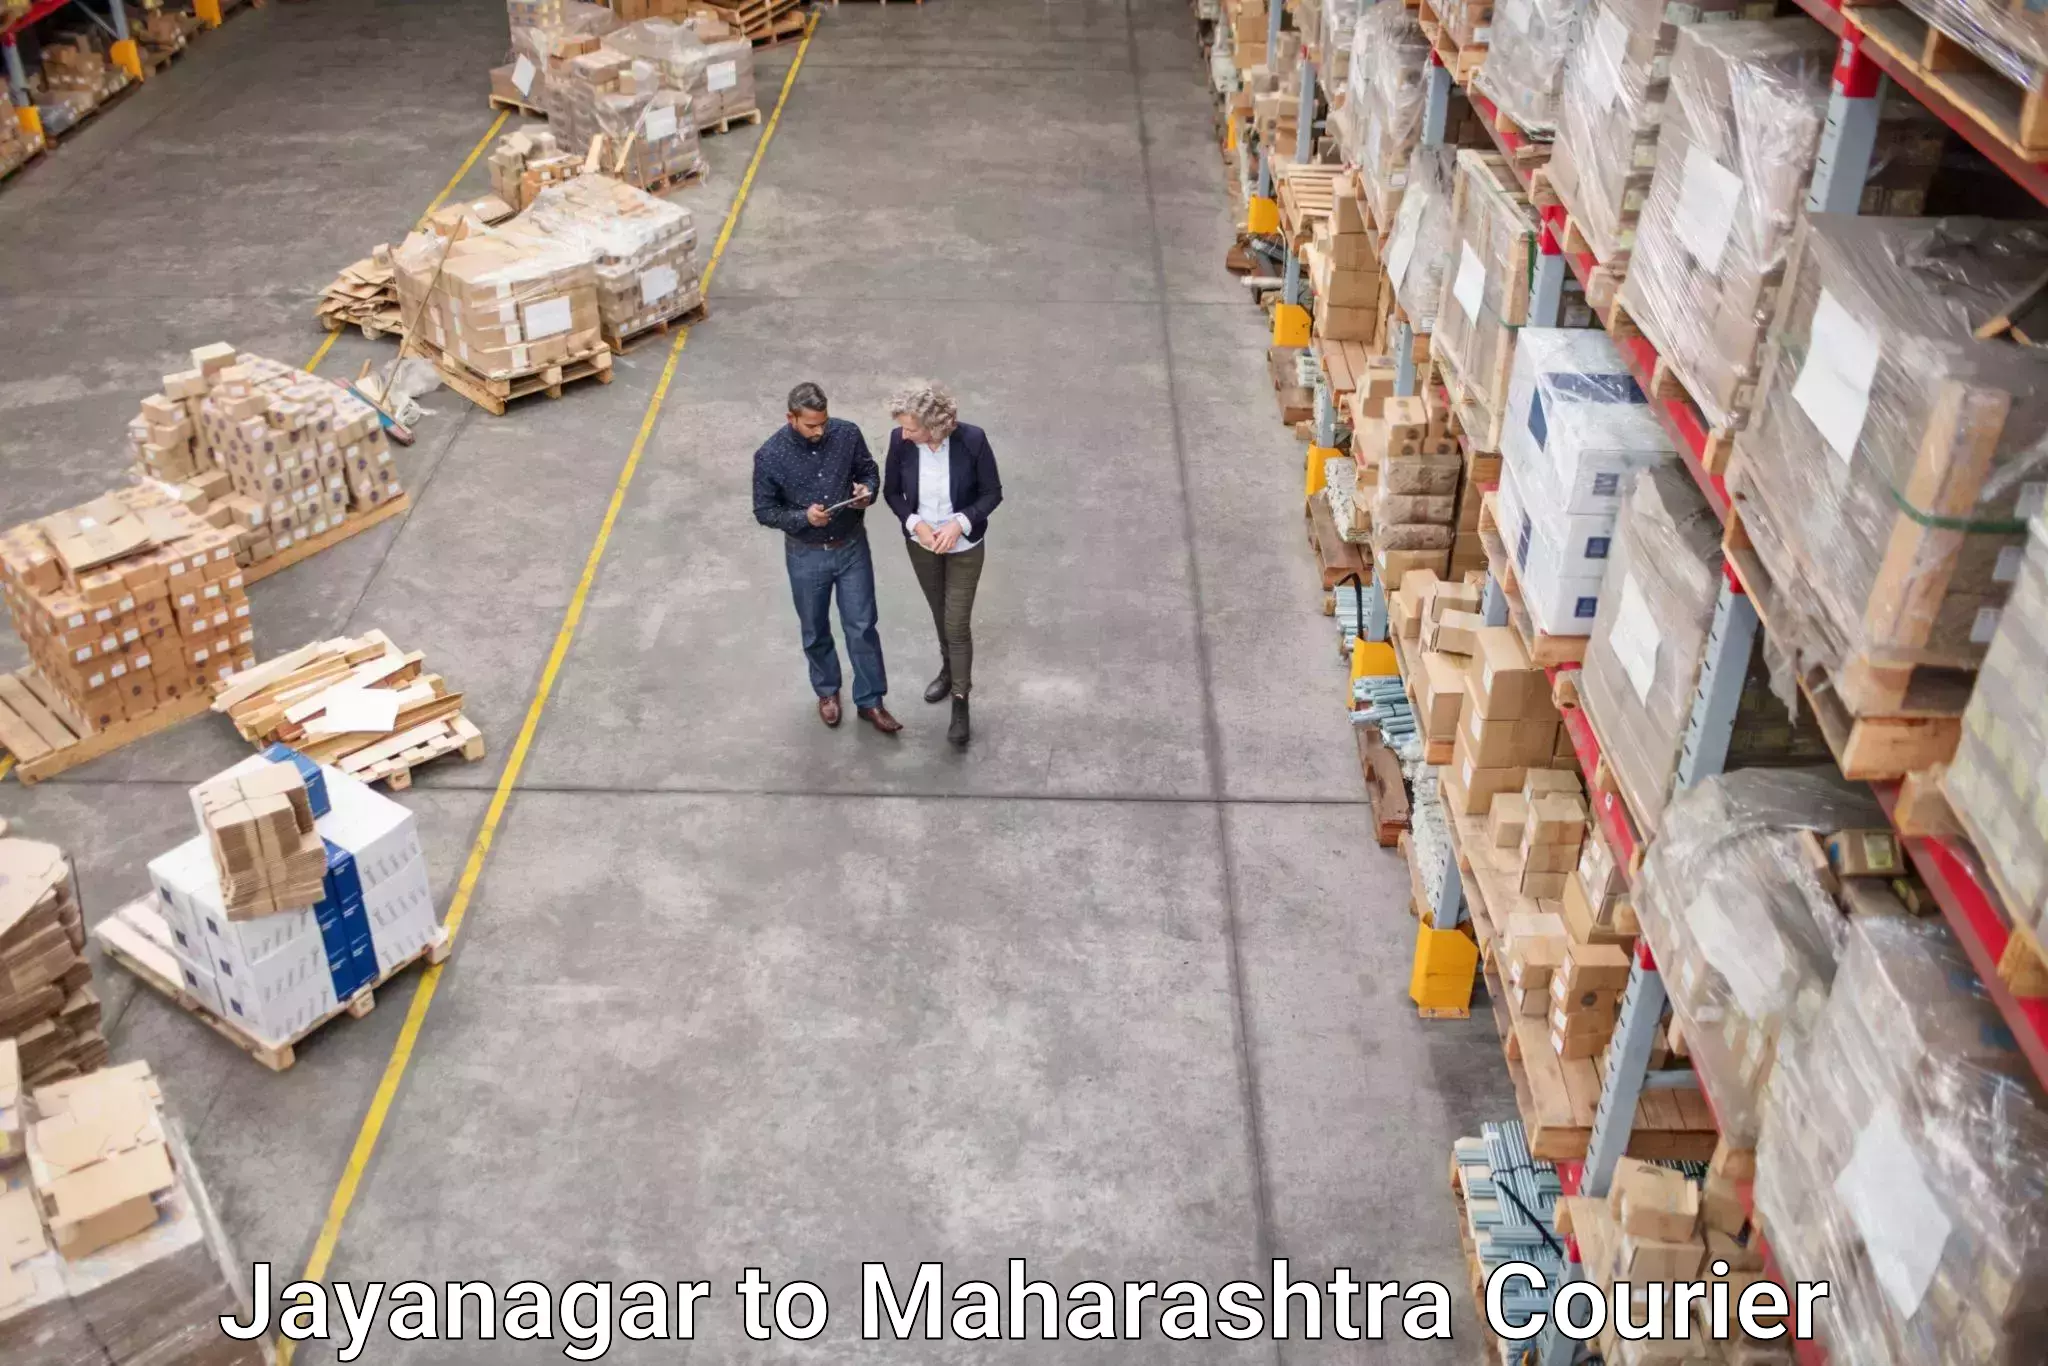 Courier membership in Jayanagar to Mahim